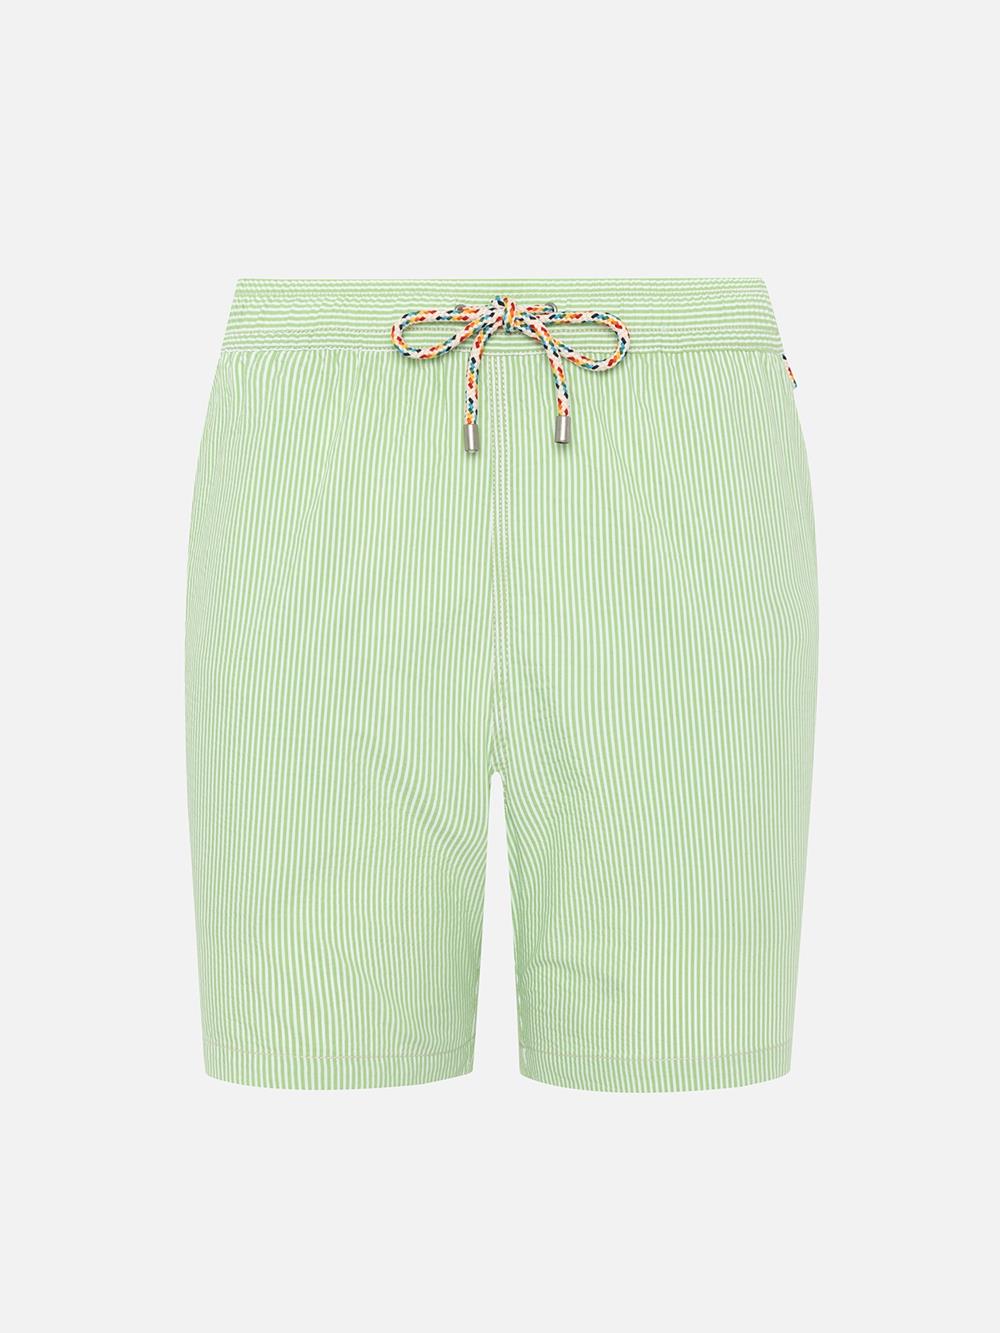 Green stripes Capri swimwear